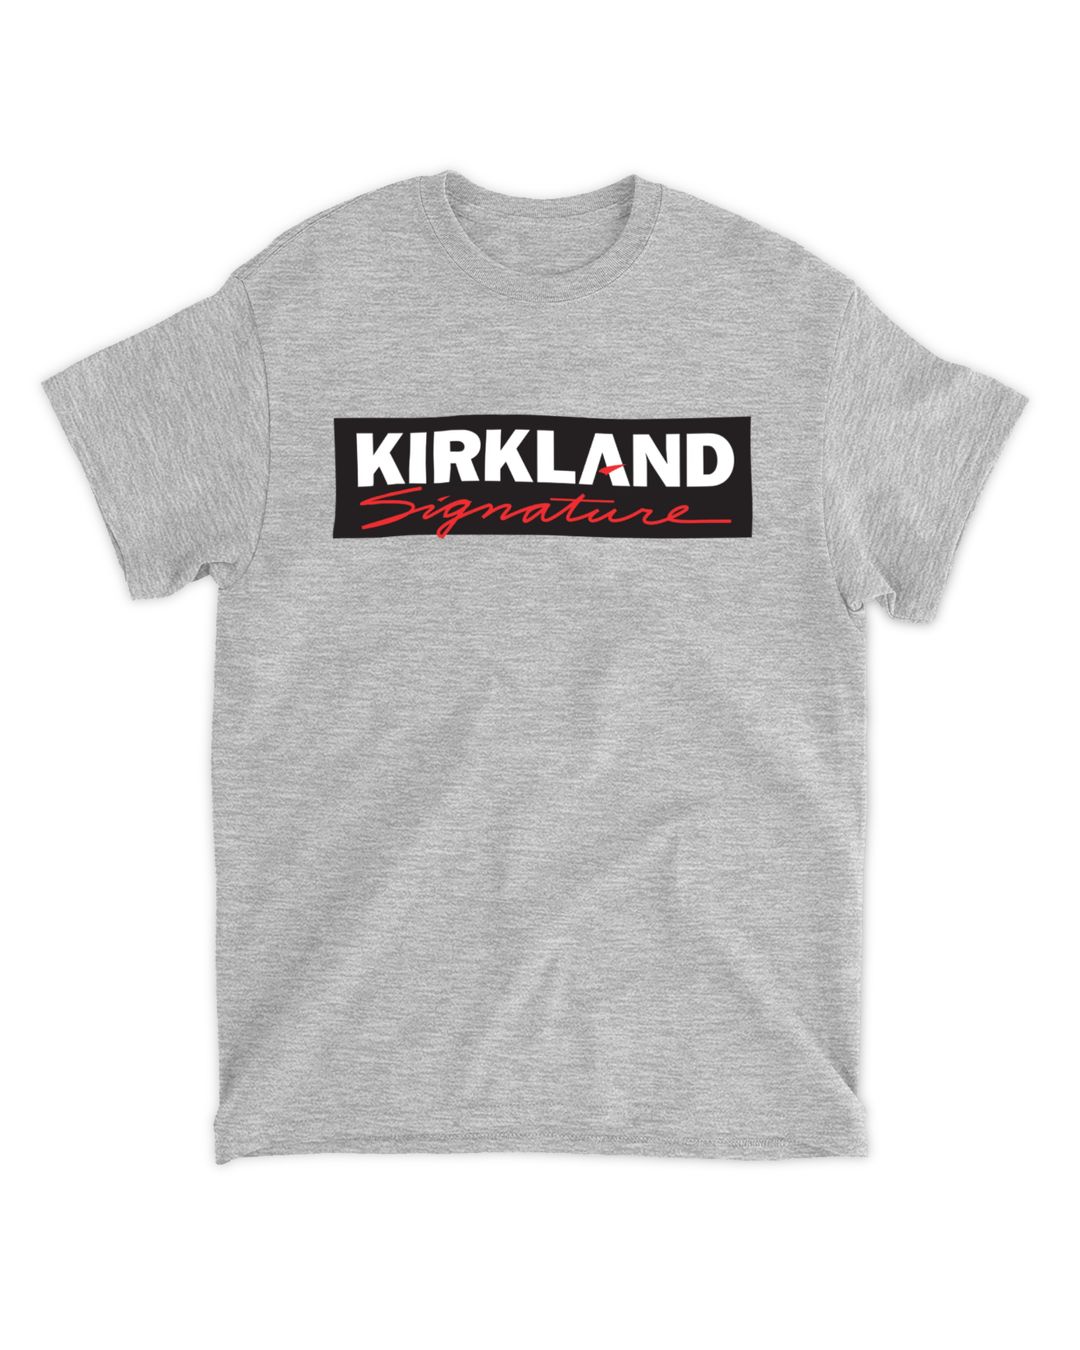 Kirkland Signature Tee Shirt | SenPrints